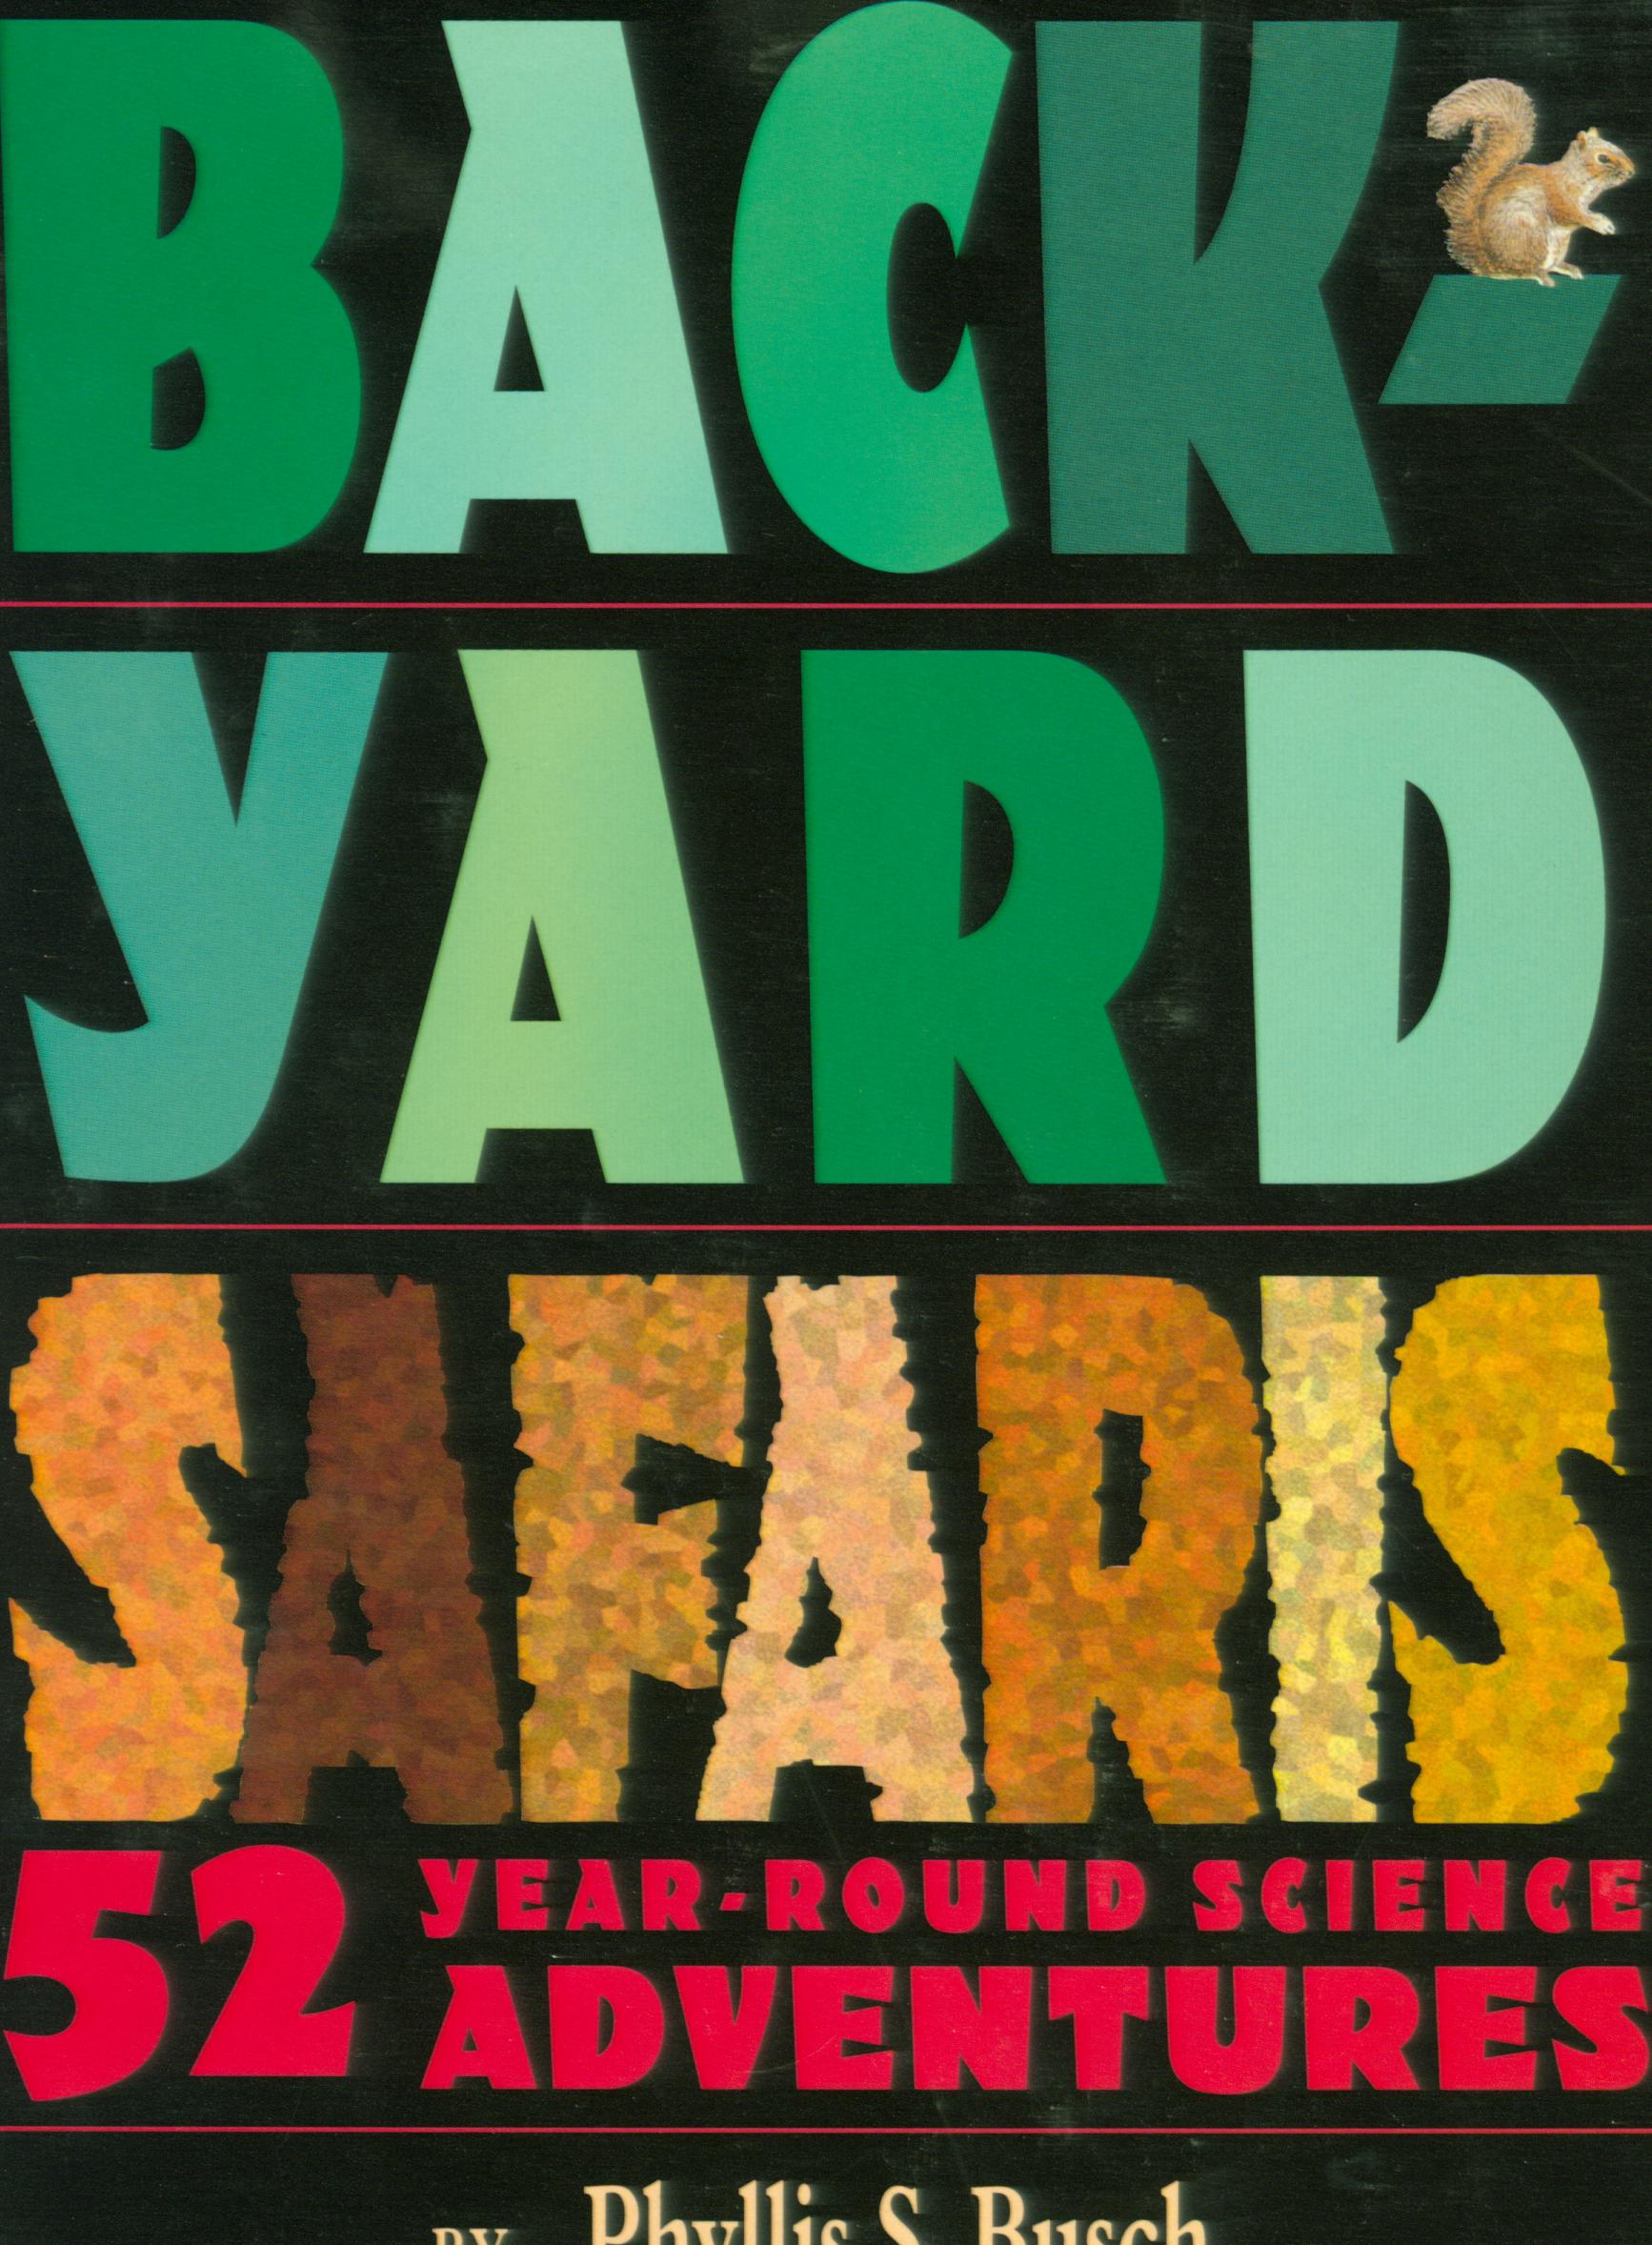 BACKYARD SAFARIS: 52 year-round science adventures. 